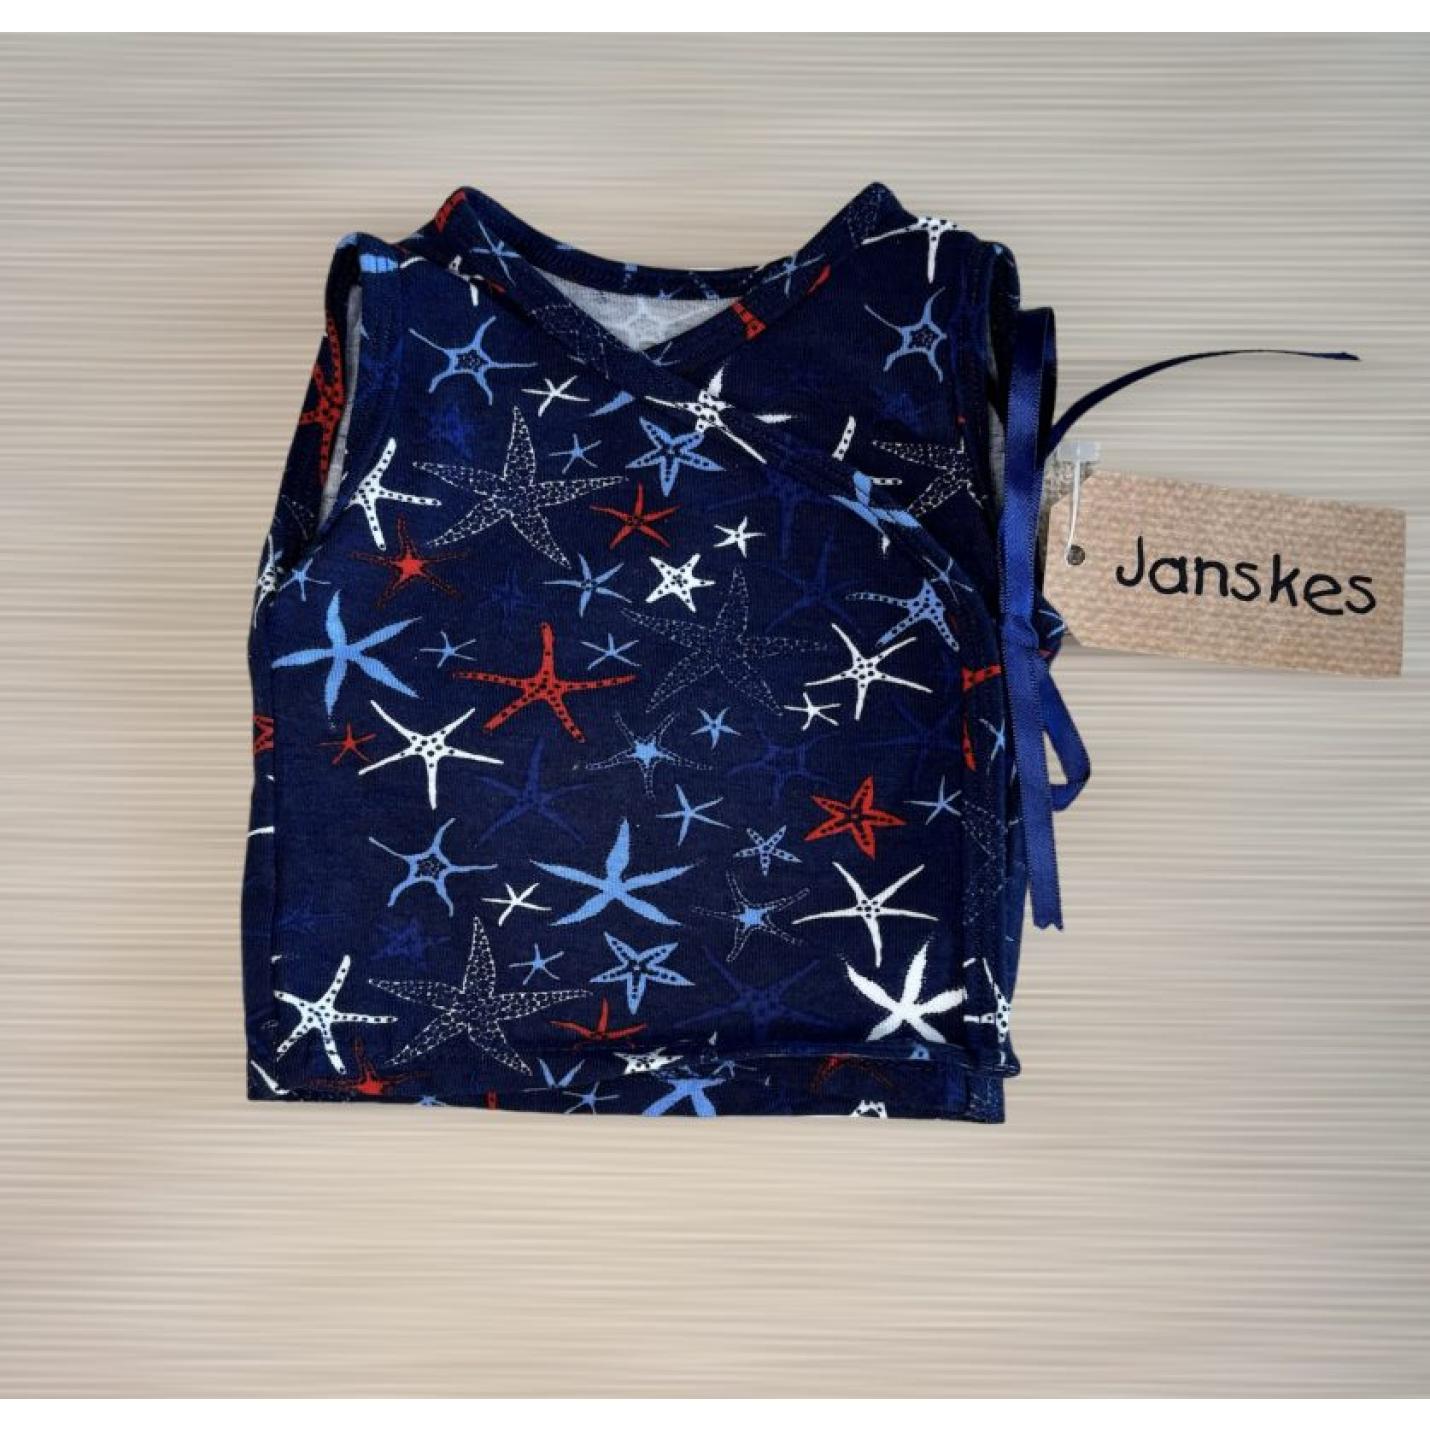 Janskes overslaghemdje Boaz - 48 - Overslag hemdje